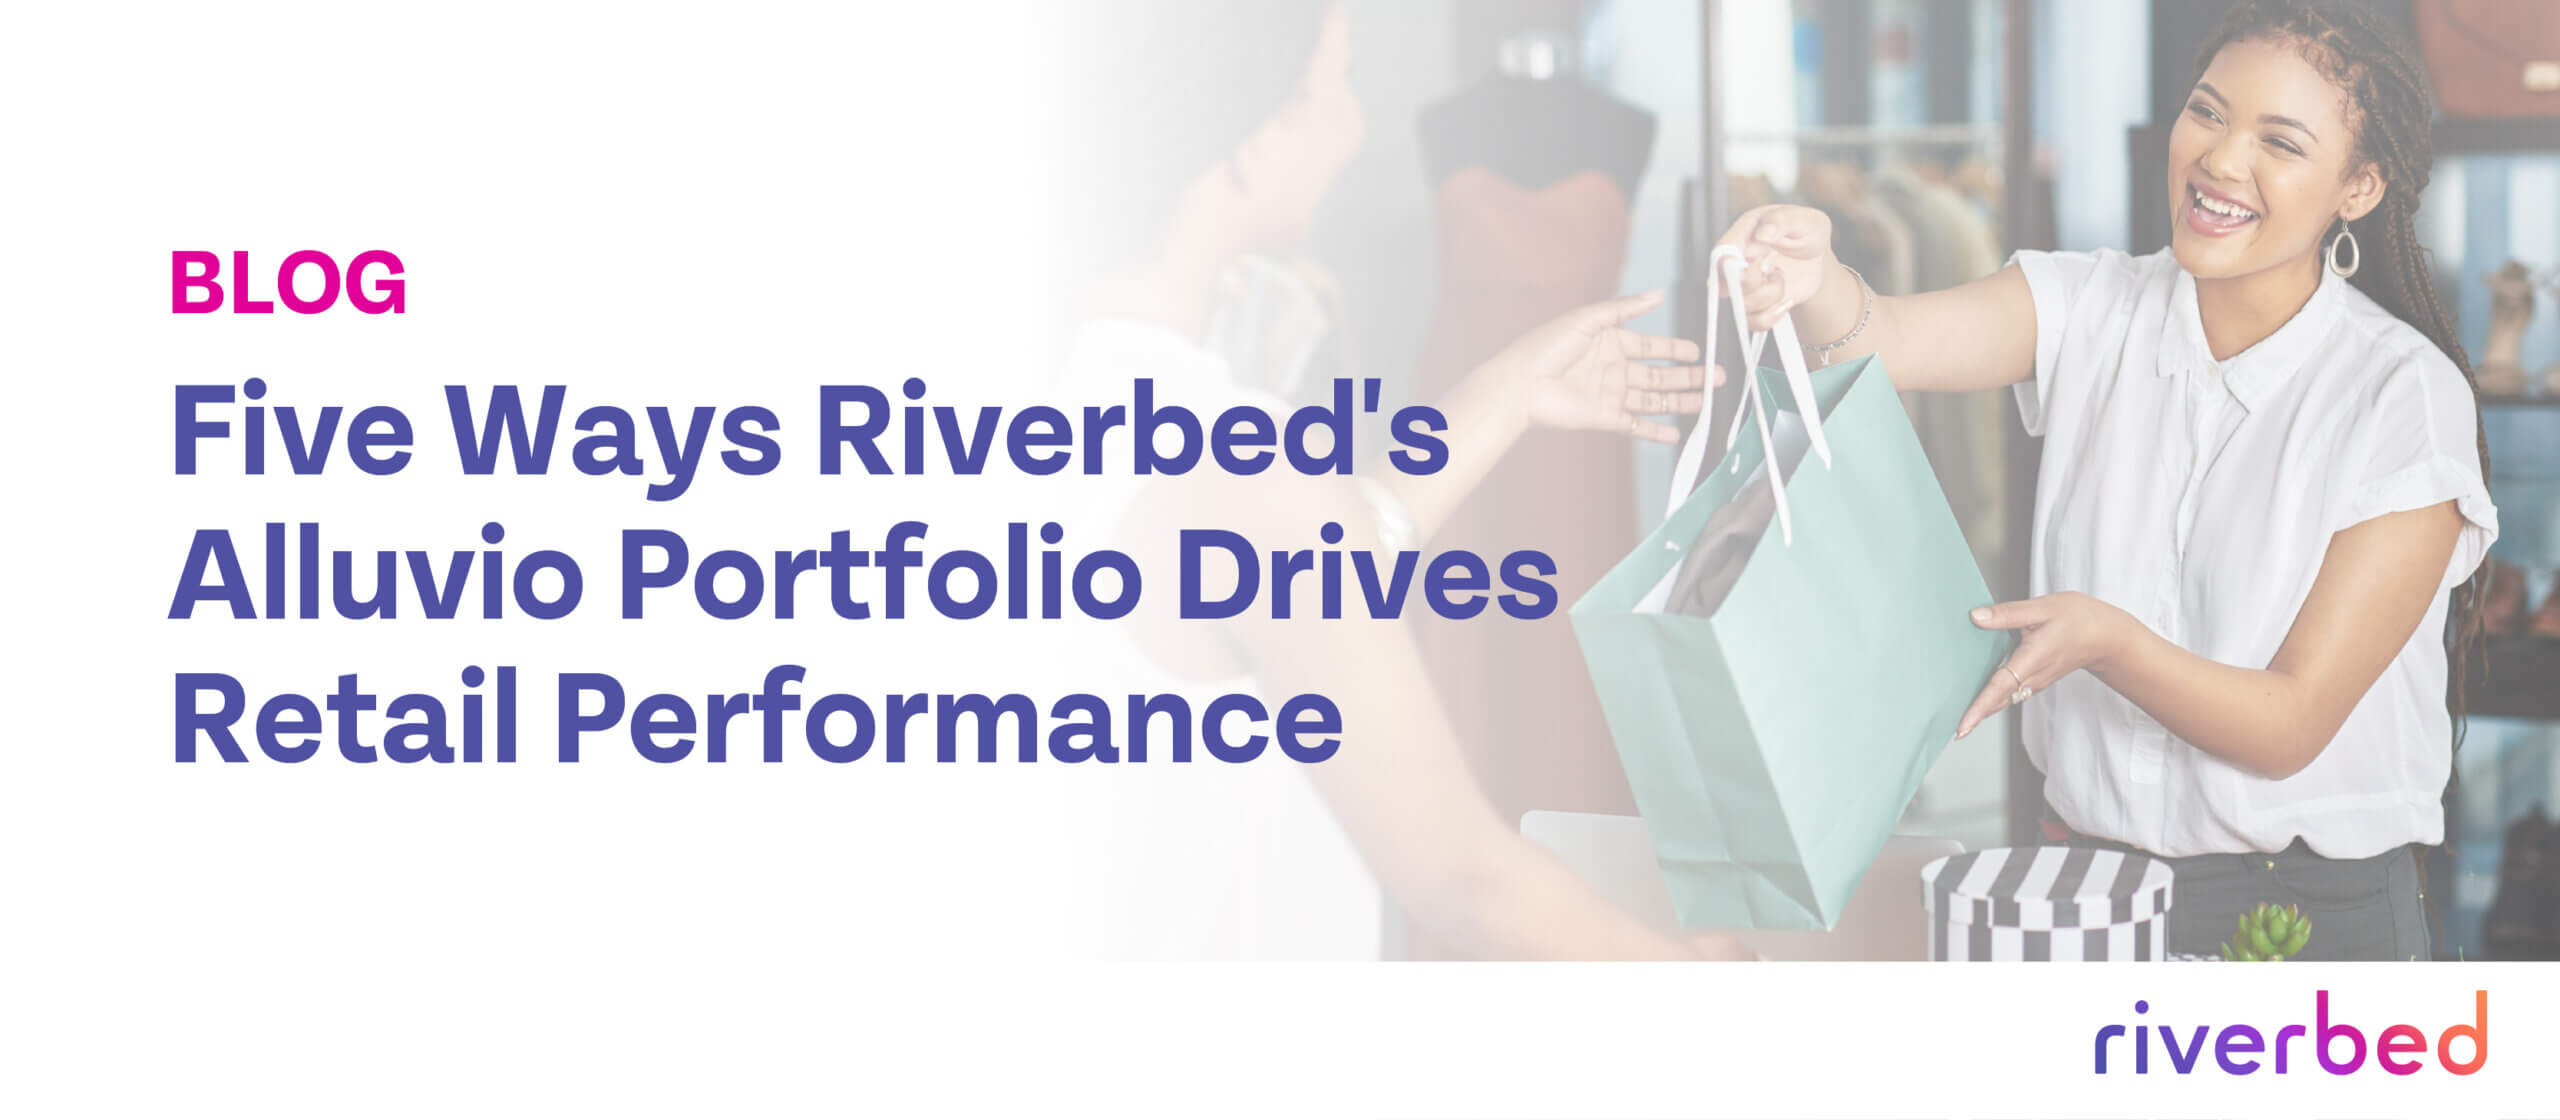 Five Ways Riverbed’s Portfolio Drives Retail Performance